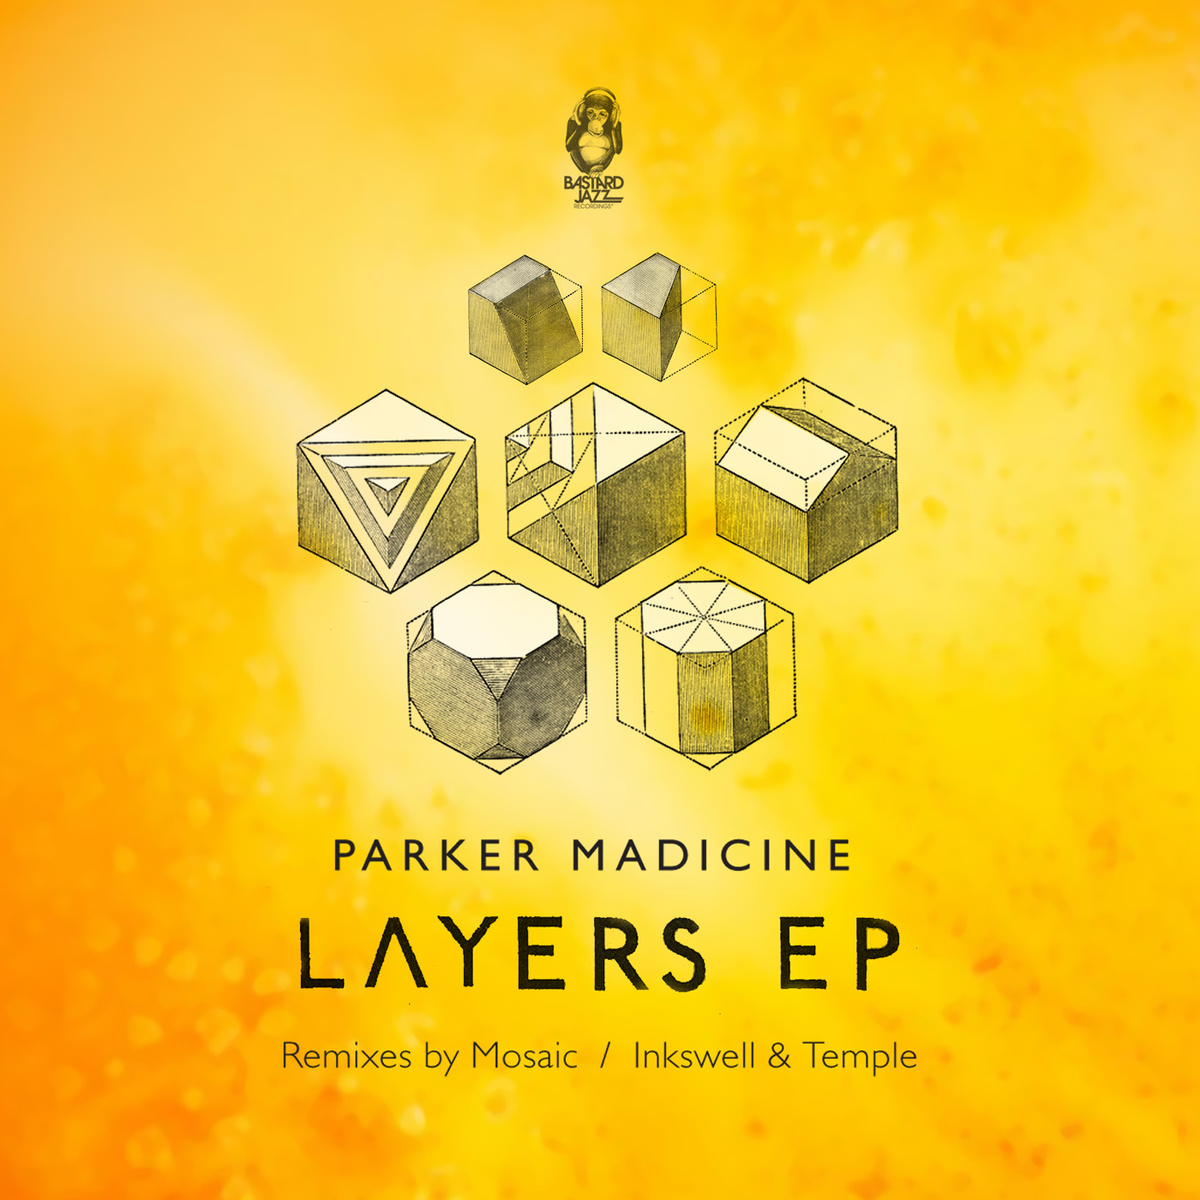 Parker Madicine - "Layers" (Release) | @ParkerMadicine @bastardjazz